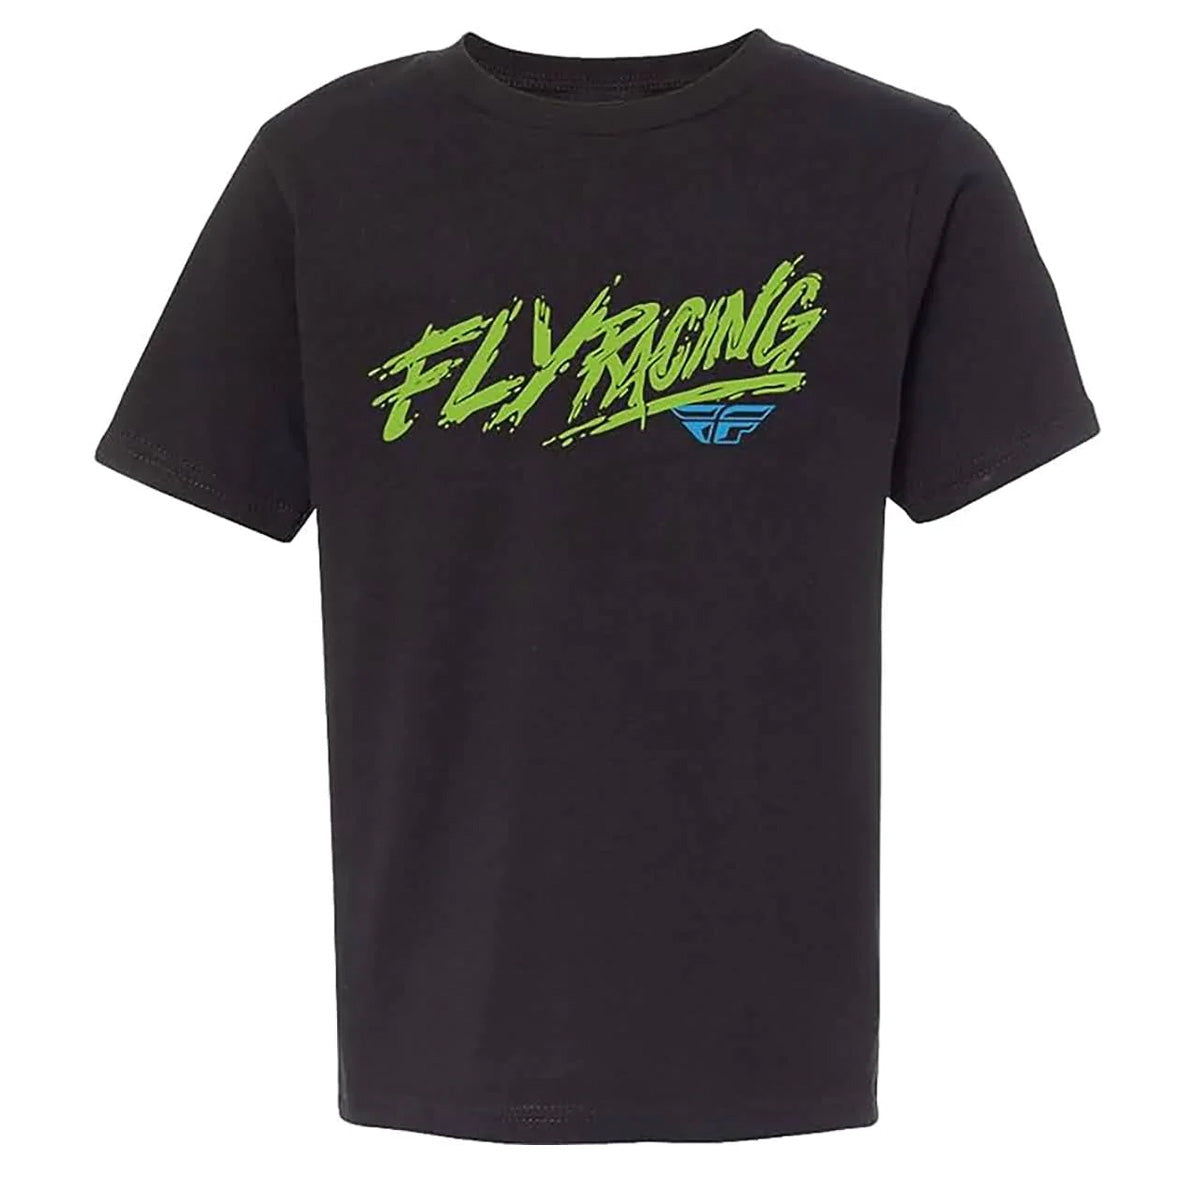 
Fly Racing Khaos Youth Boys Short-Sleeve Shirts 